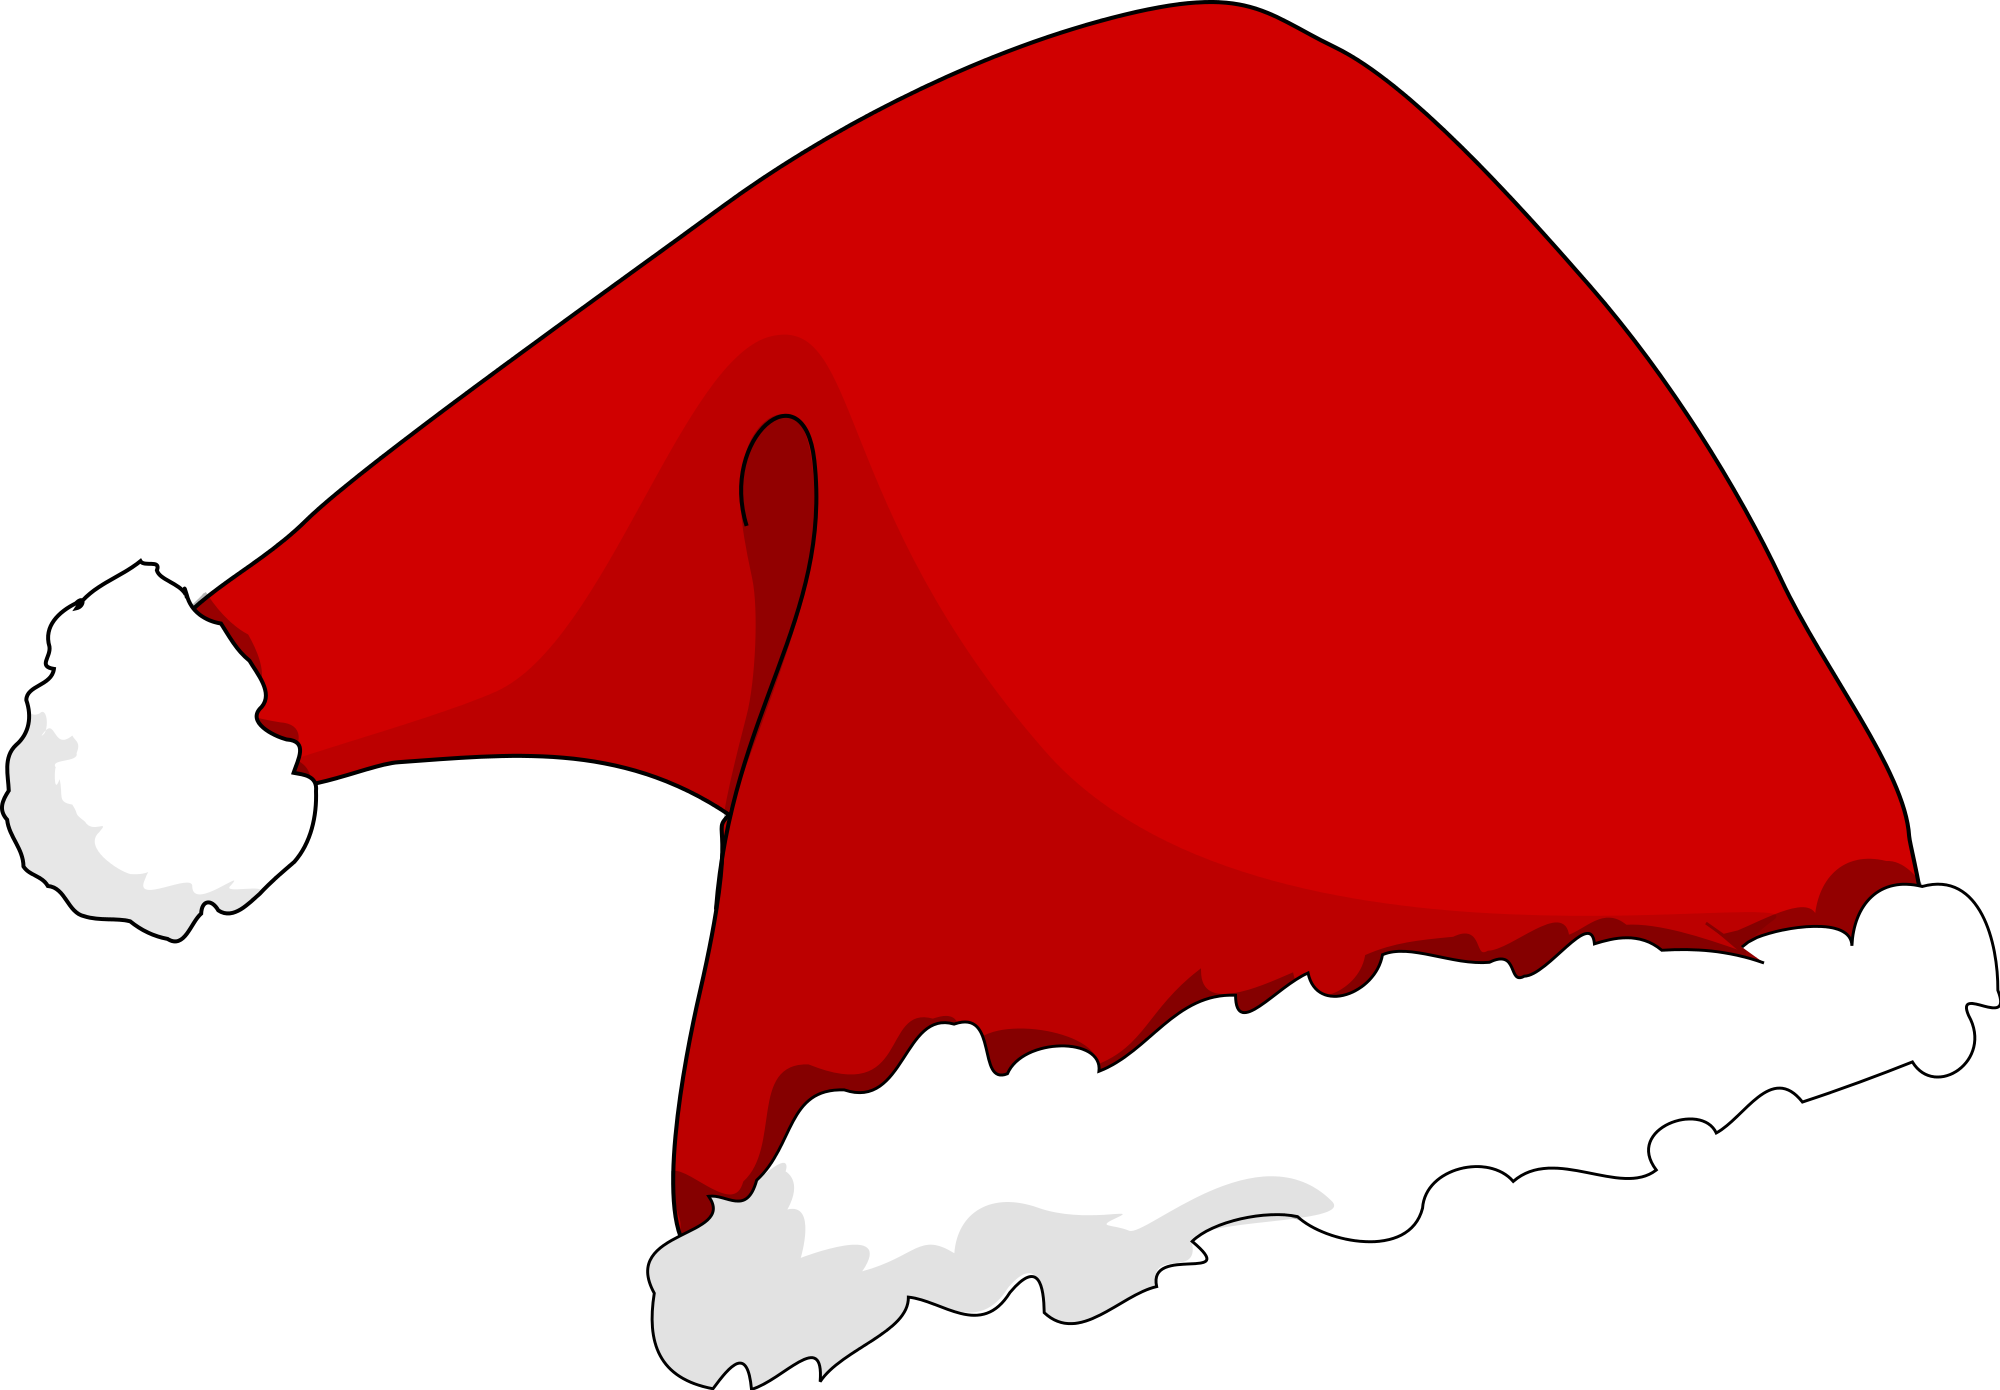 https://commons.wikimedia.org/wiki/File:Santa_hat.svg